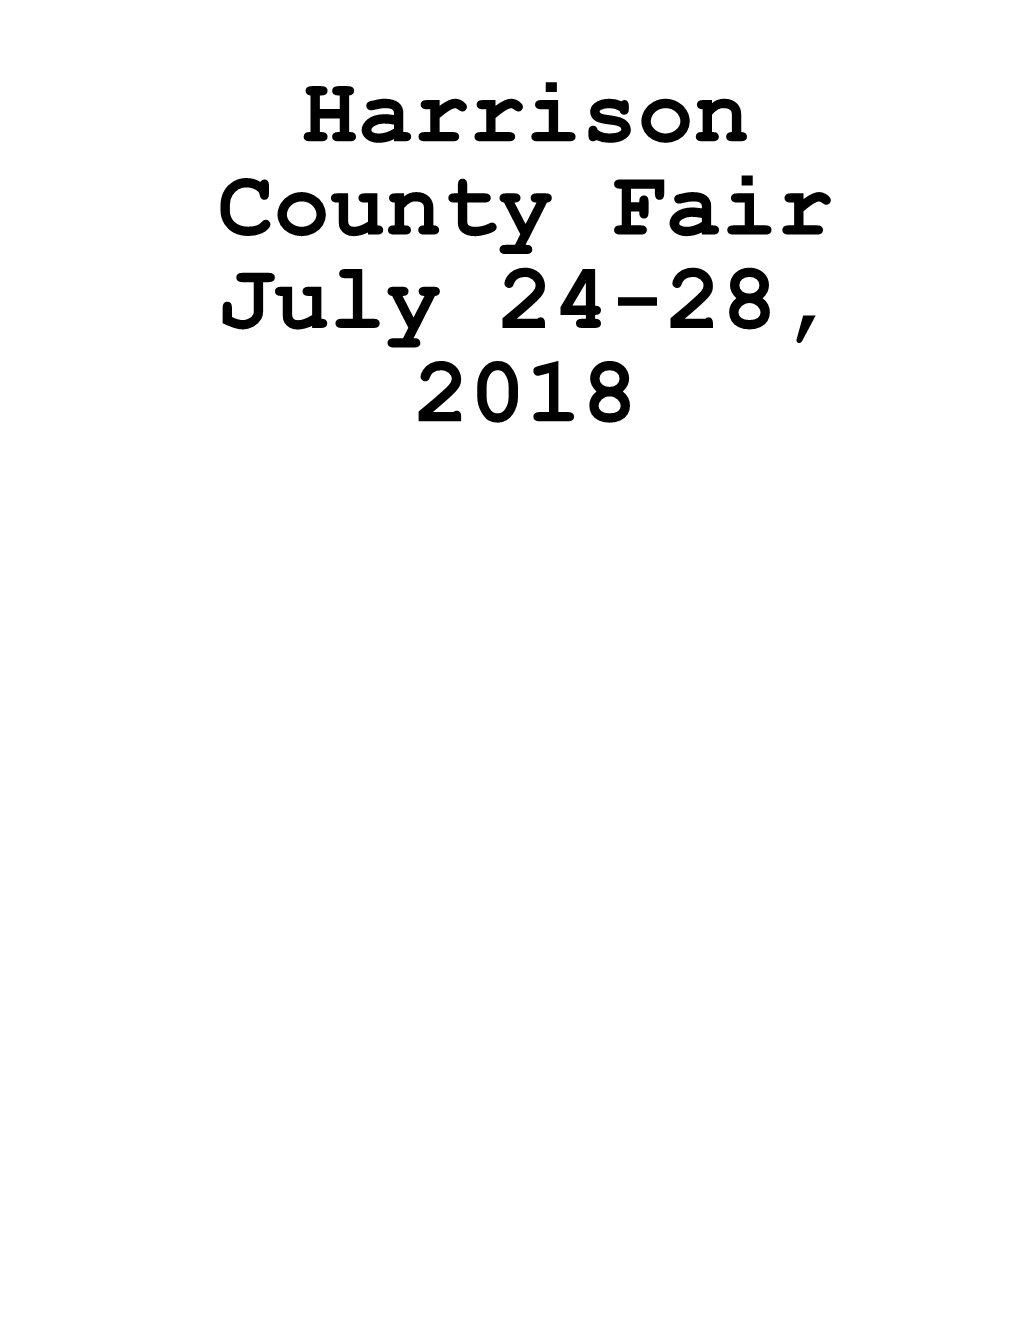 Harrison County Fair July 24-28, 2018